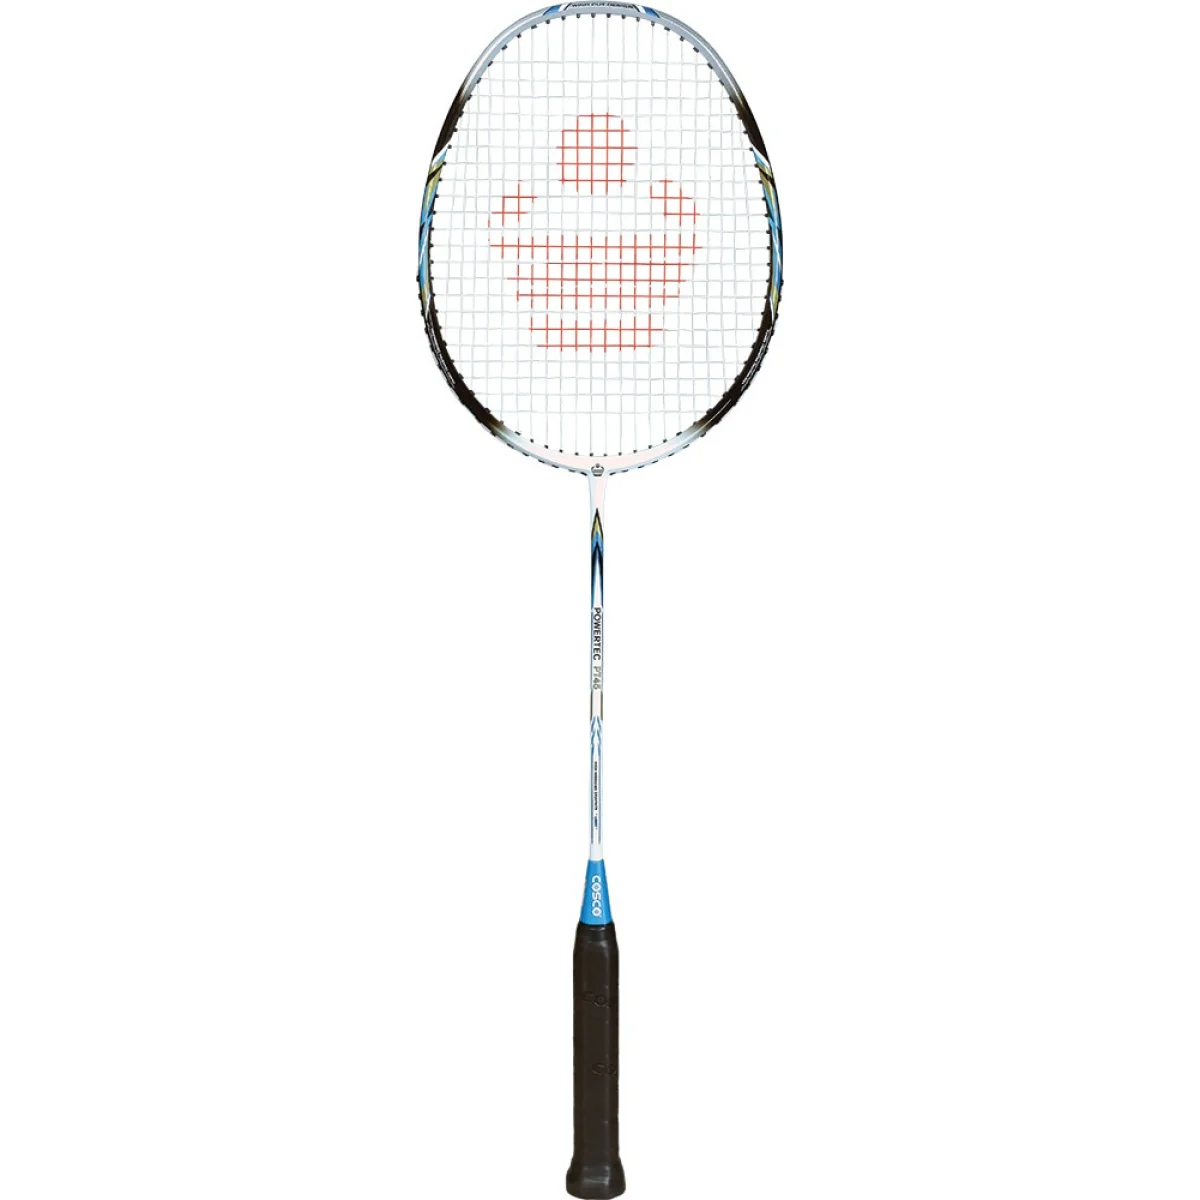 Buy Cosco Powertec PT45 Badminton Racket at Lowest Prices